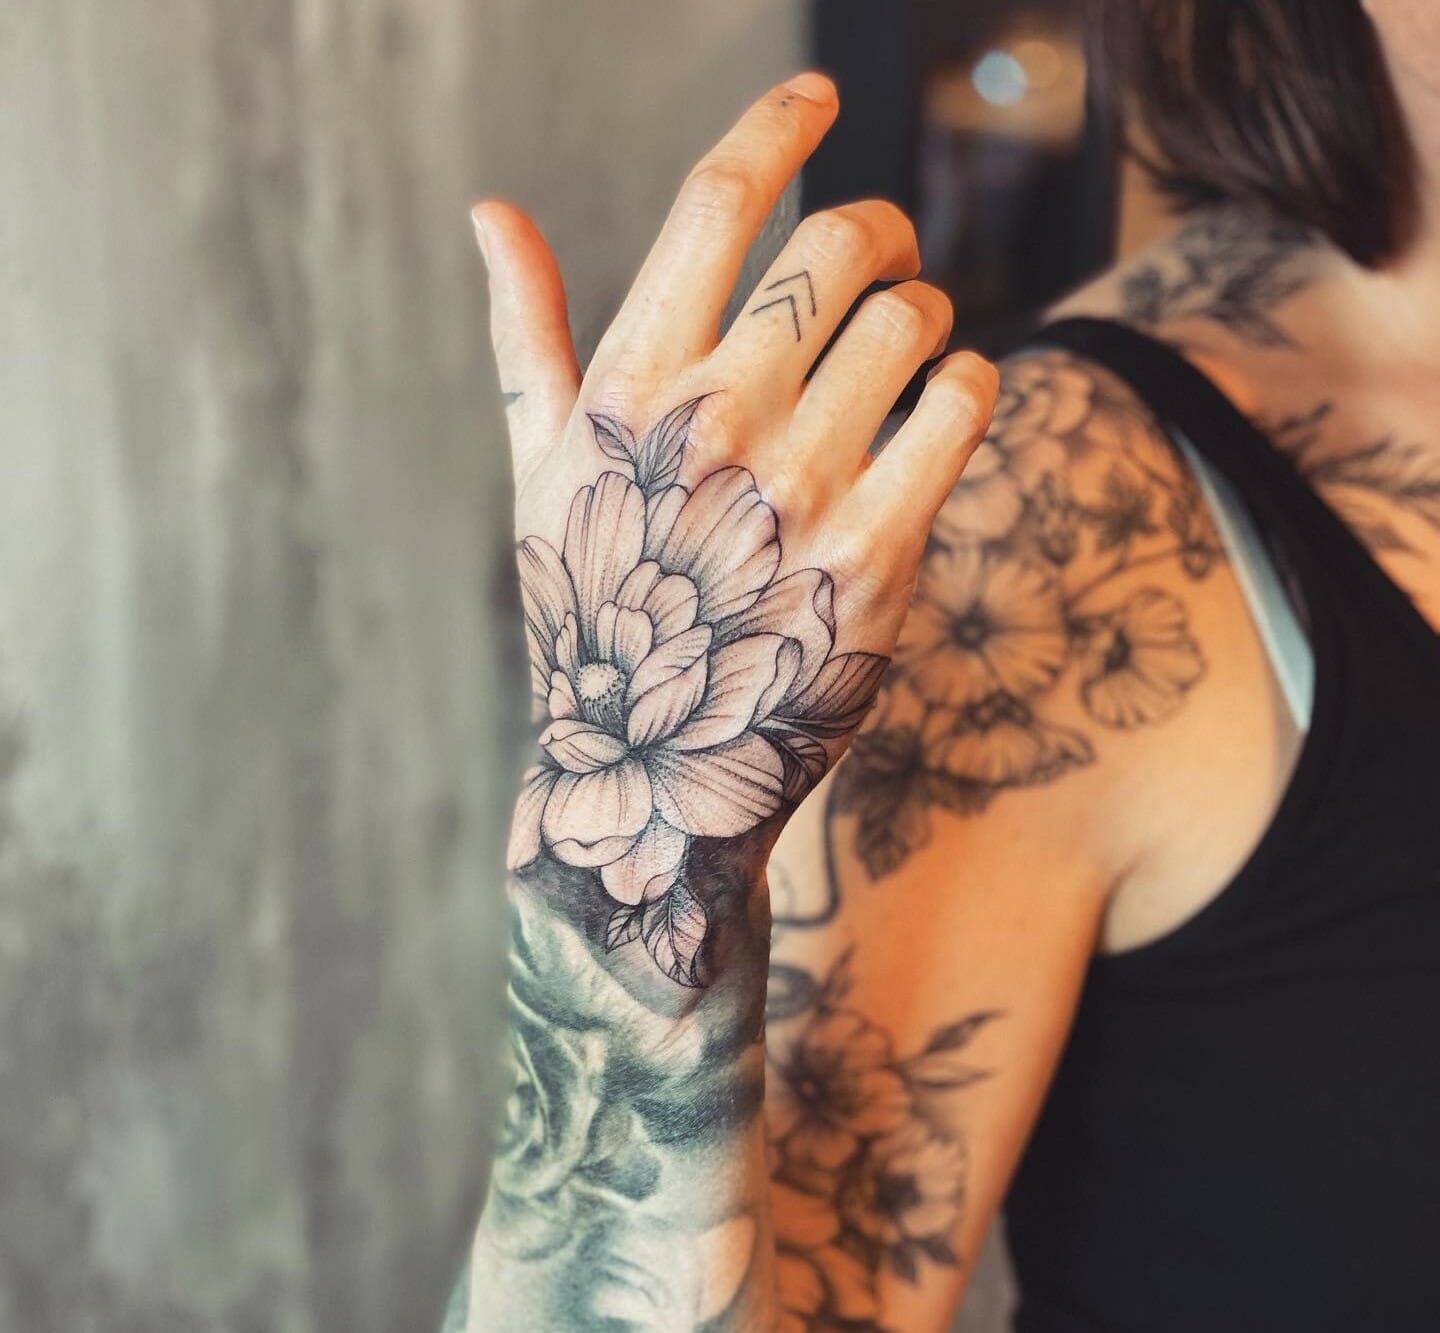 Hand Tattoos  Styles Artwork and Preparation Tips  Bloggingorg